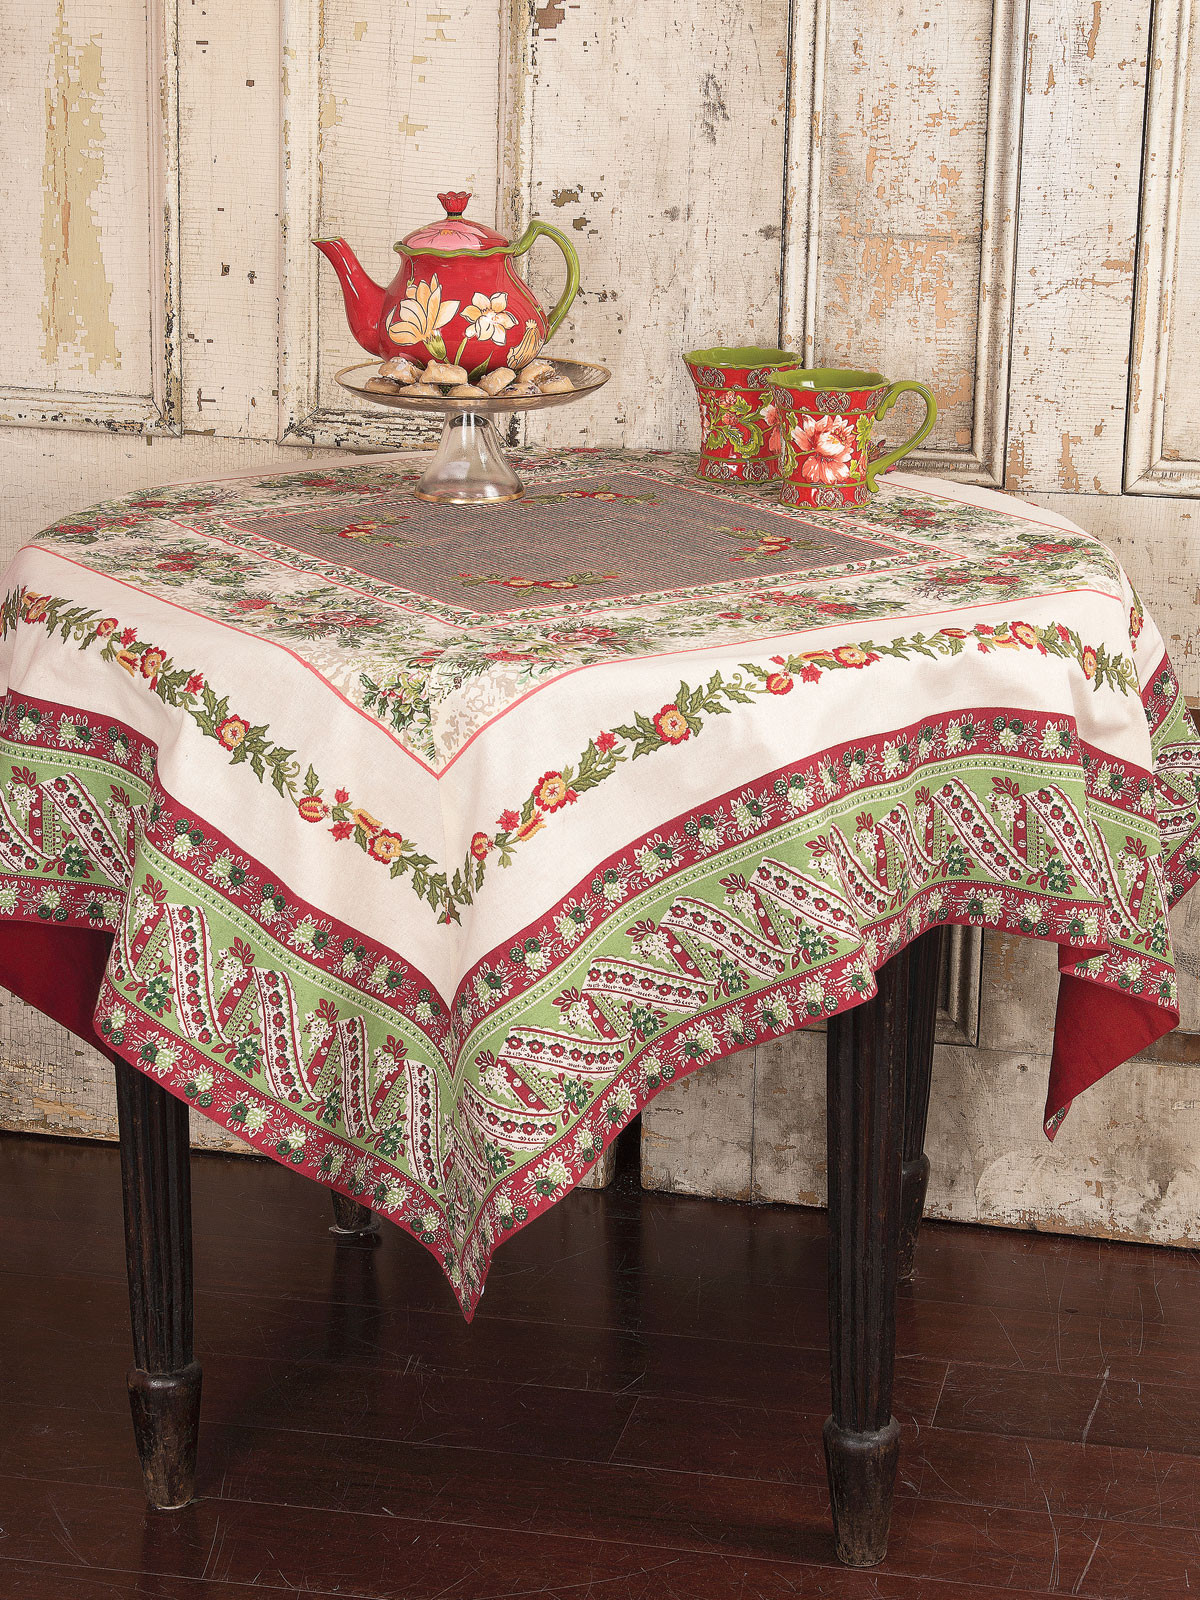 Christmas Table Linens
 Joyful Patchwork Tablecloth